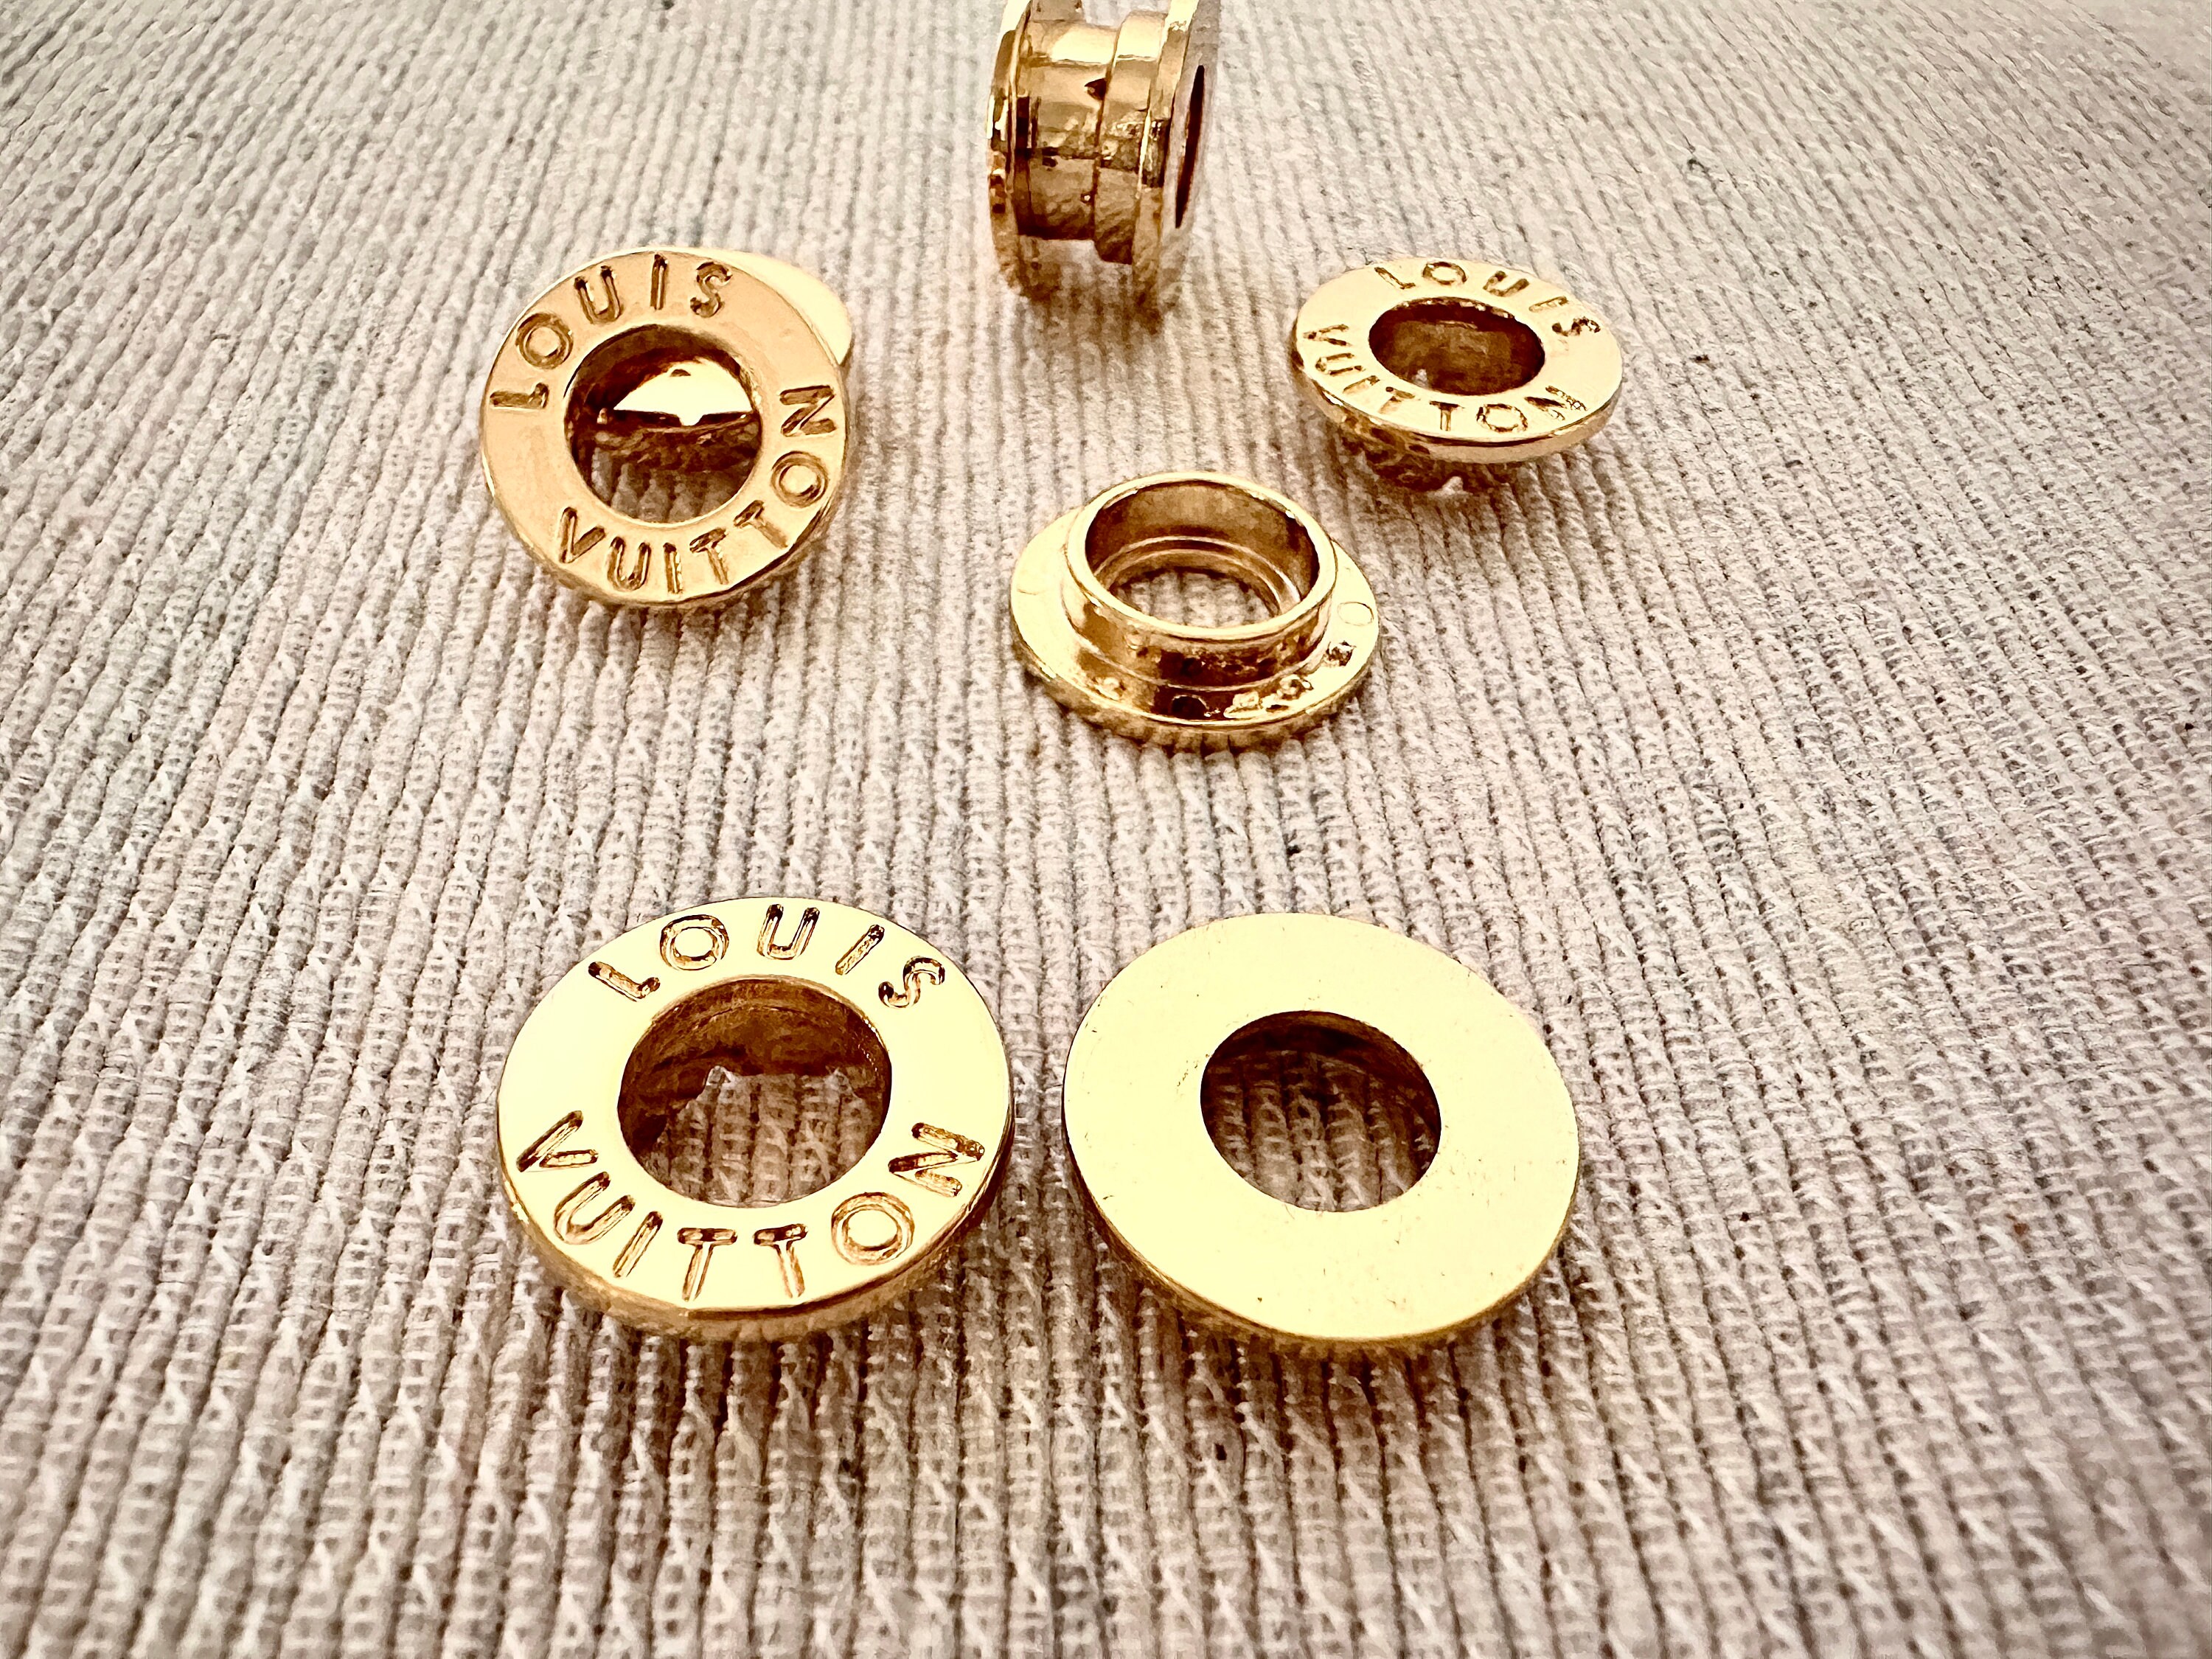 Lot 4 Vintage LV Gold Classic Metal Buttons 17mm 0,67 inch Louis Vuitton